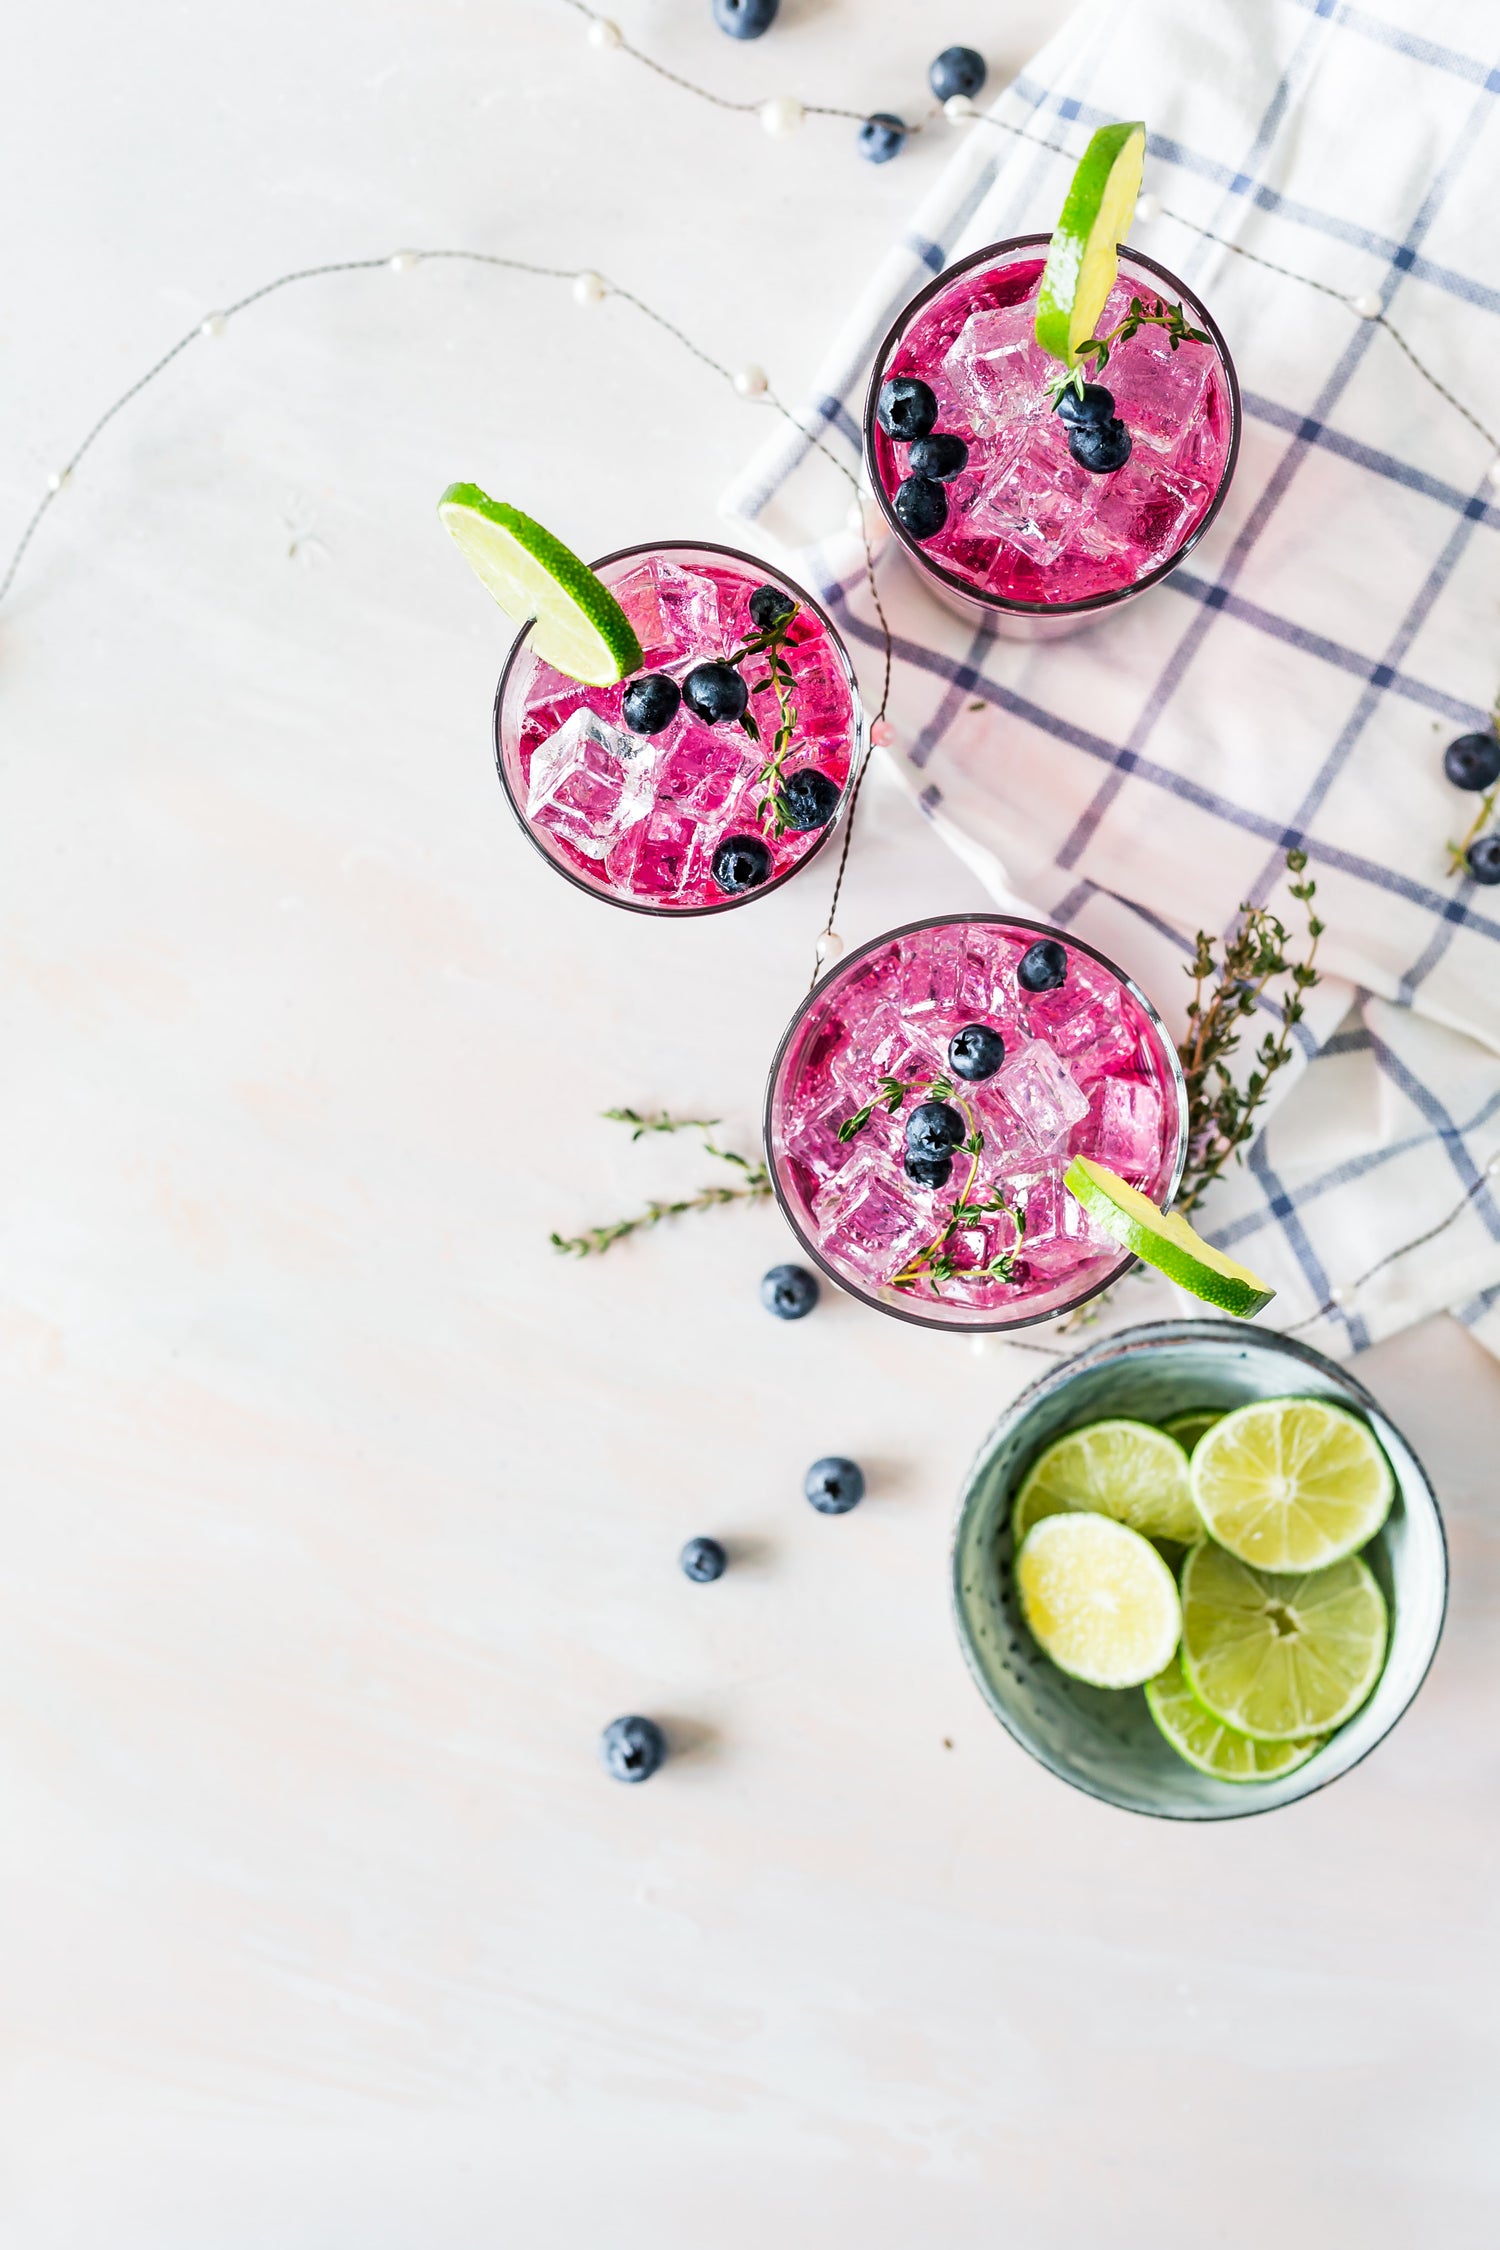 Blog posts Blueberry Mistletoe - The Spirit of Gin